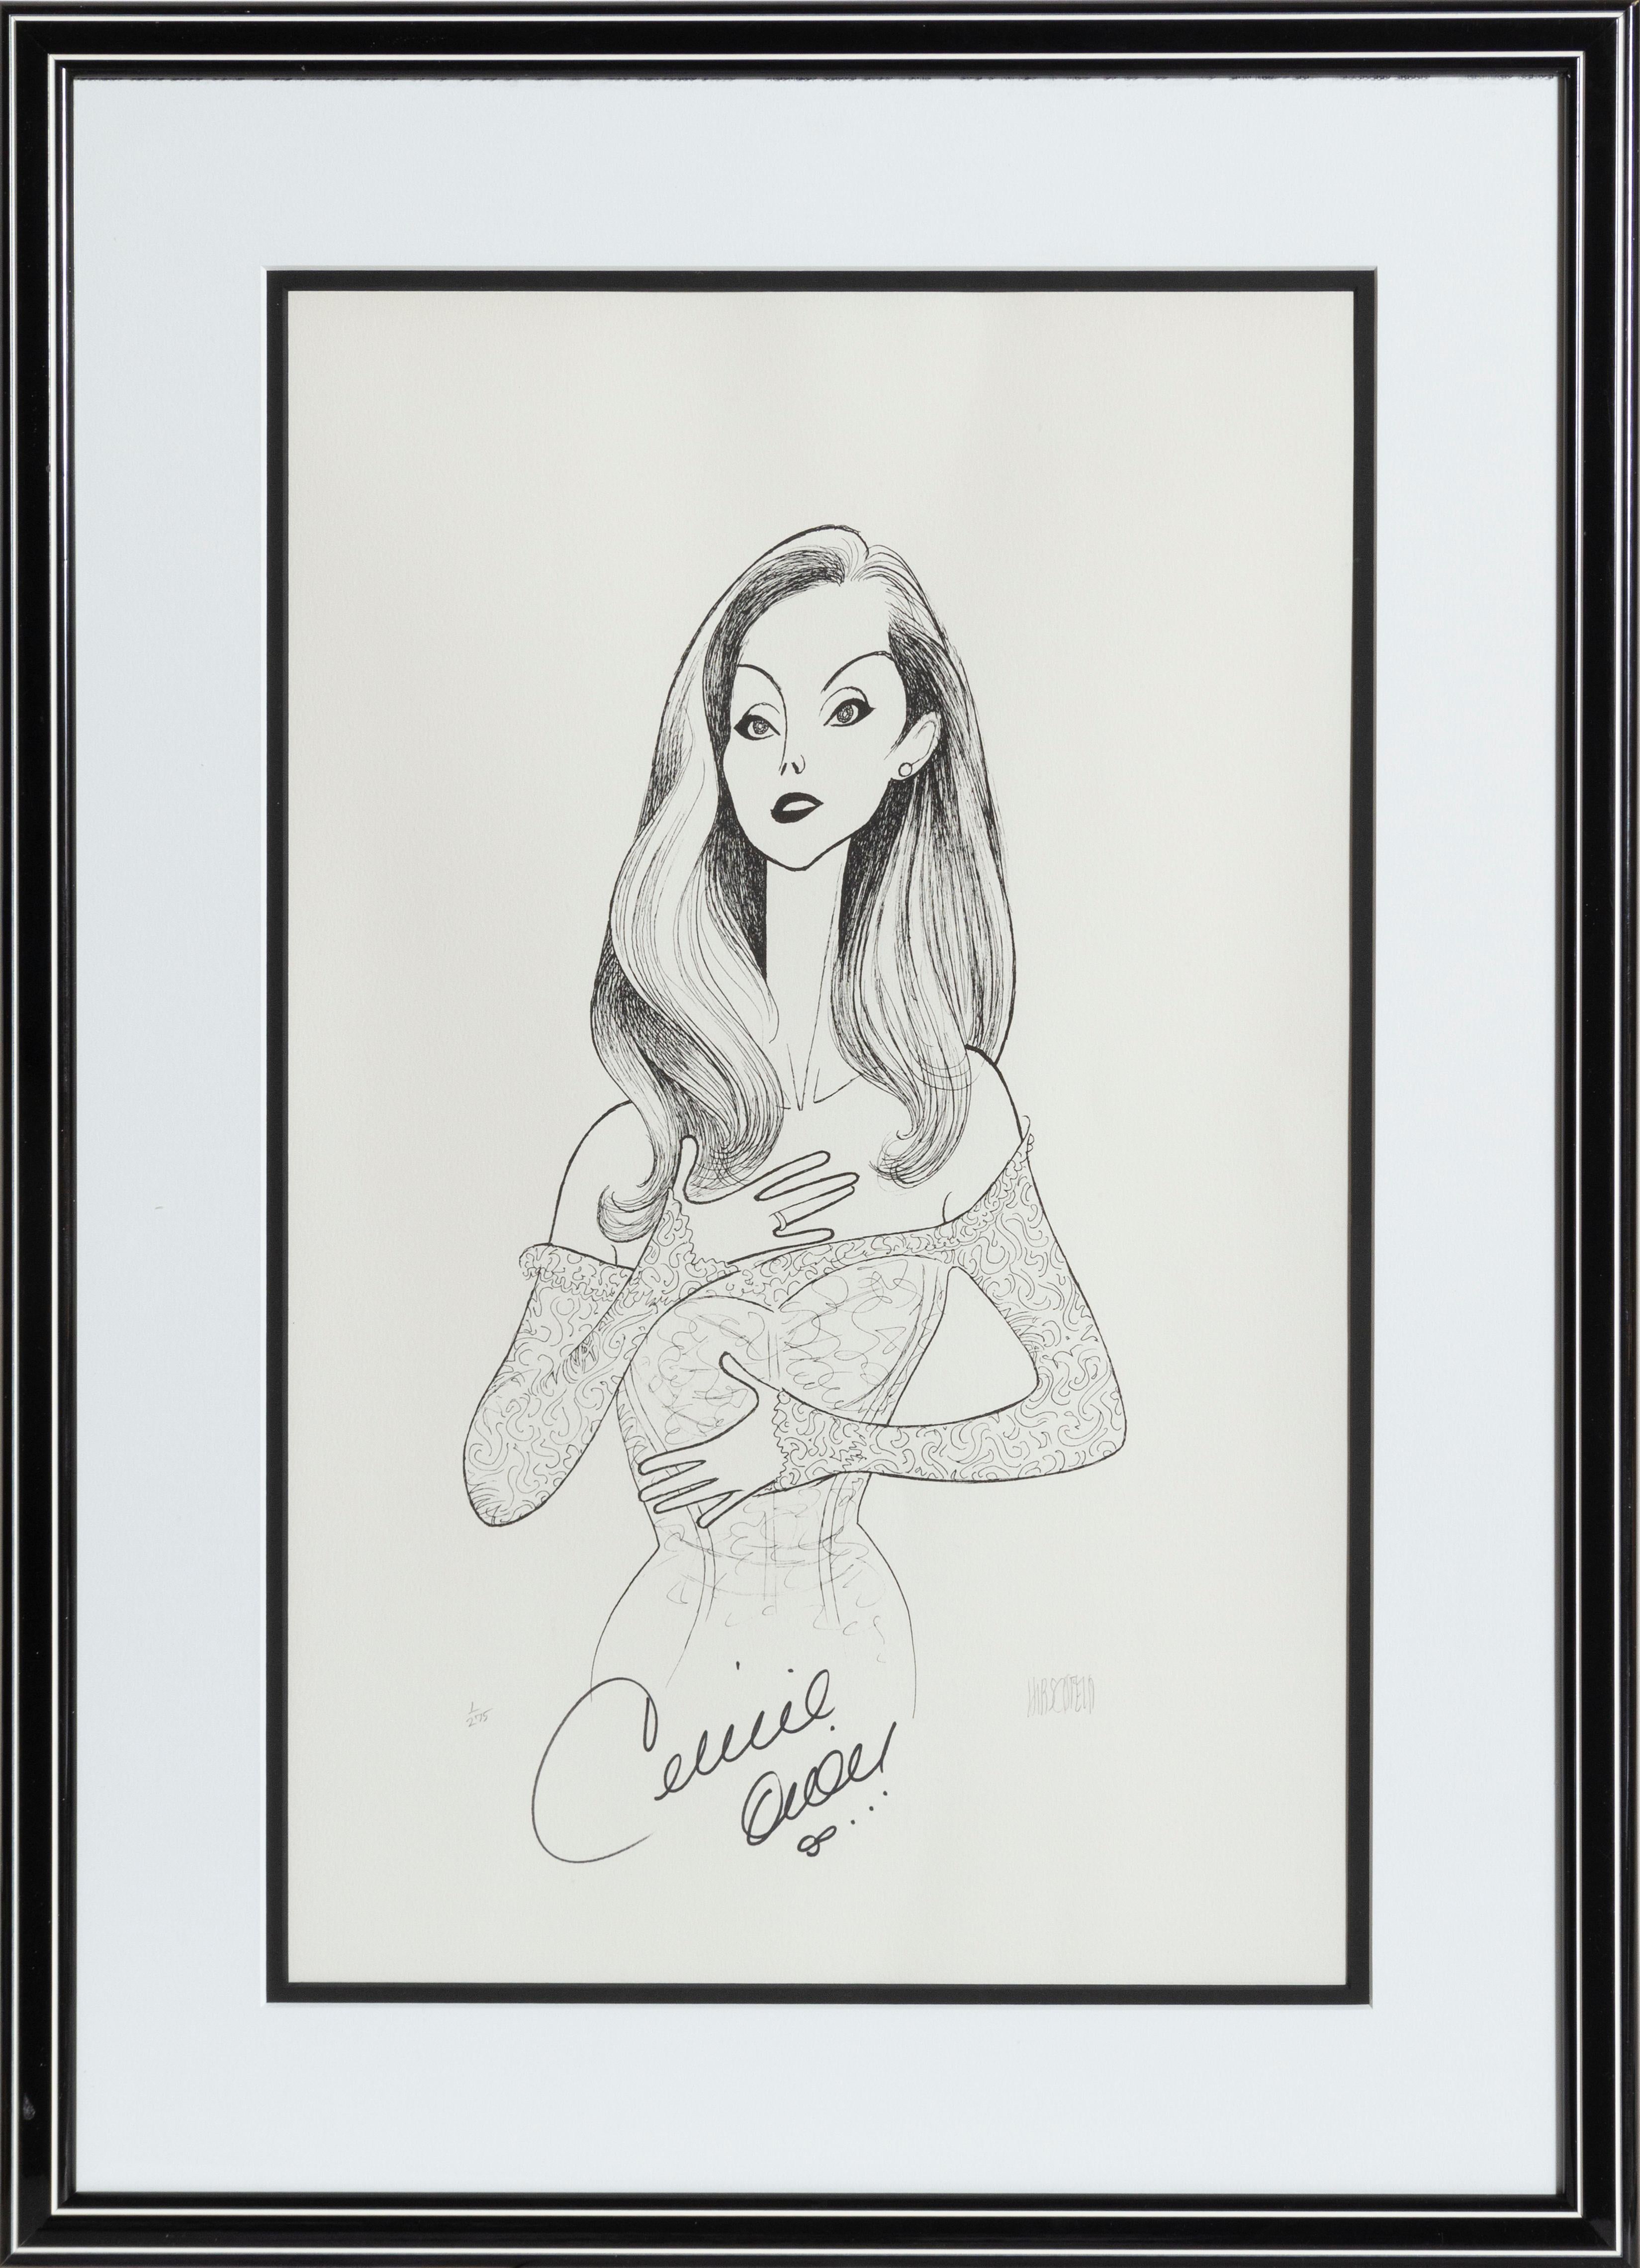 Albert Al Hirschfeld Portrait Print - Celine Dion, Autographed Caricature by Al Hirschfeld